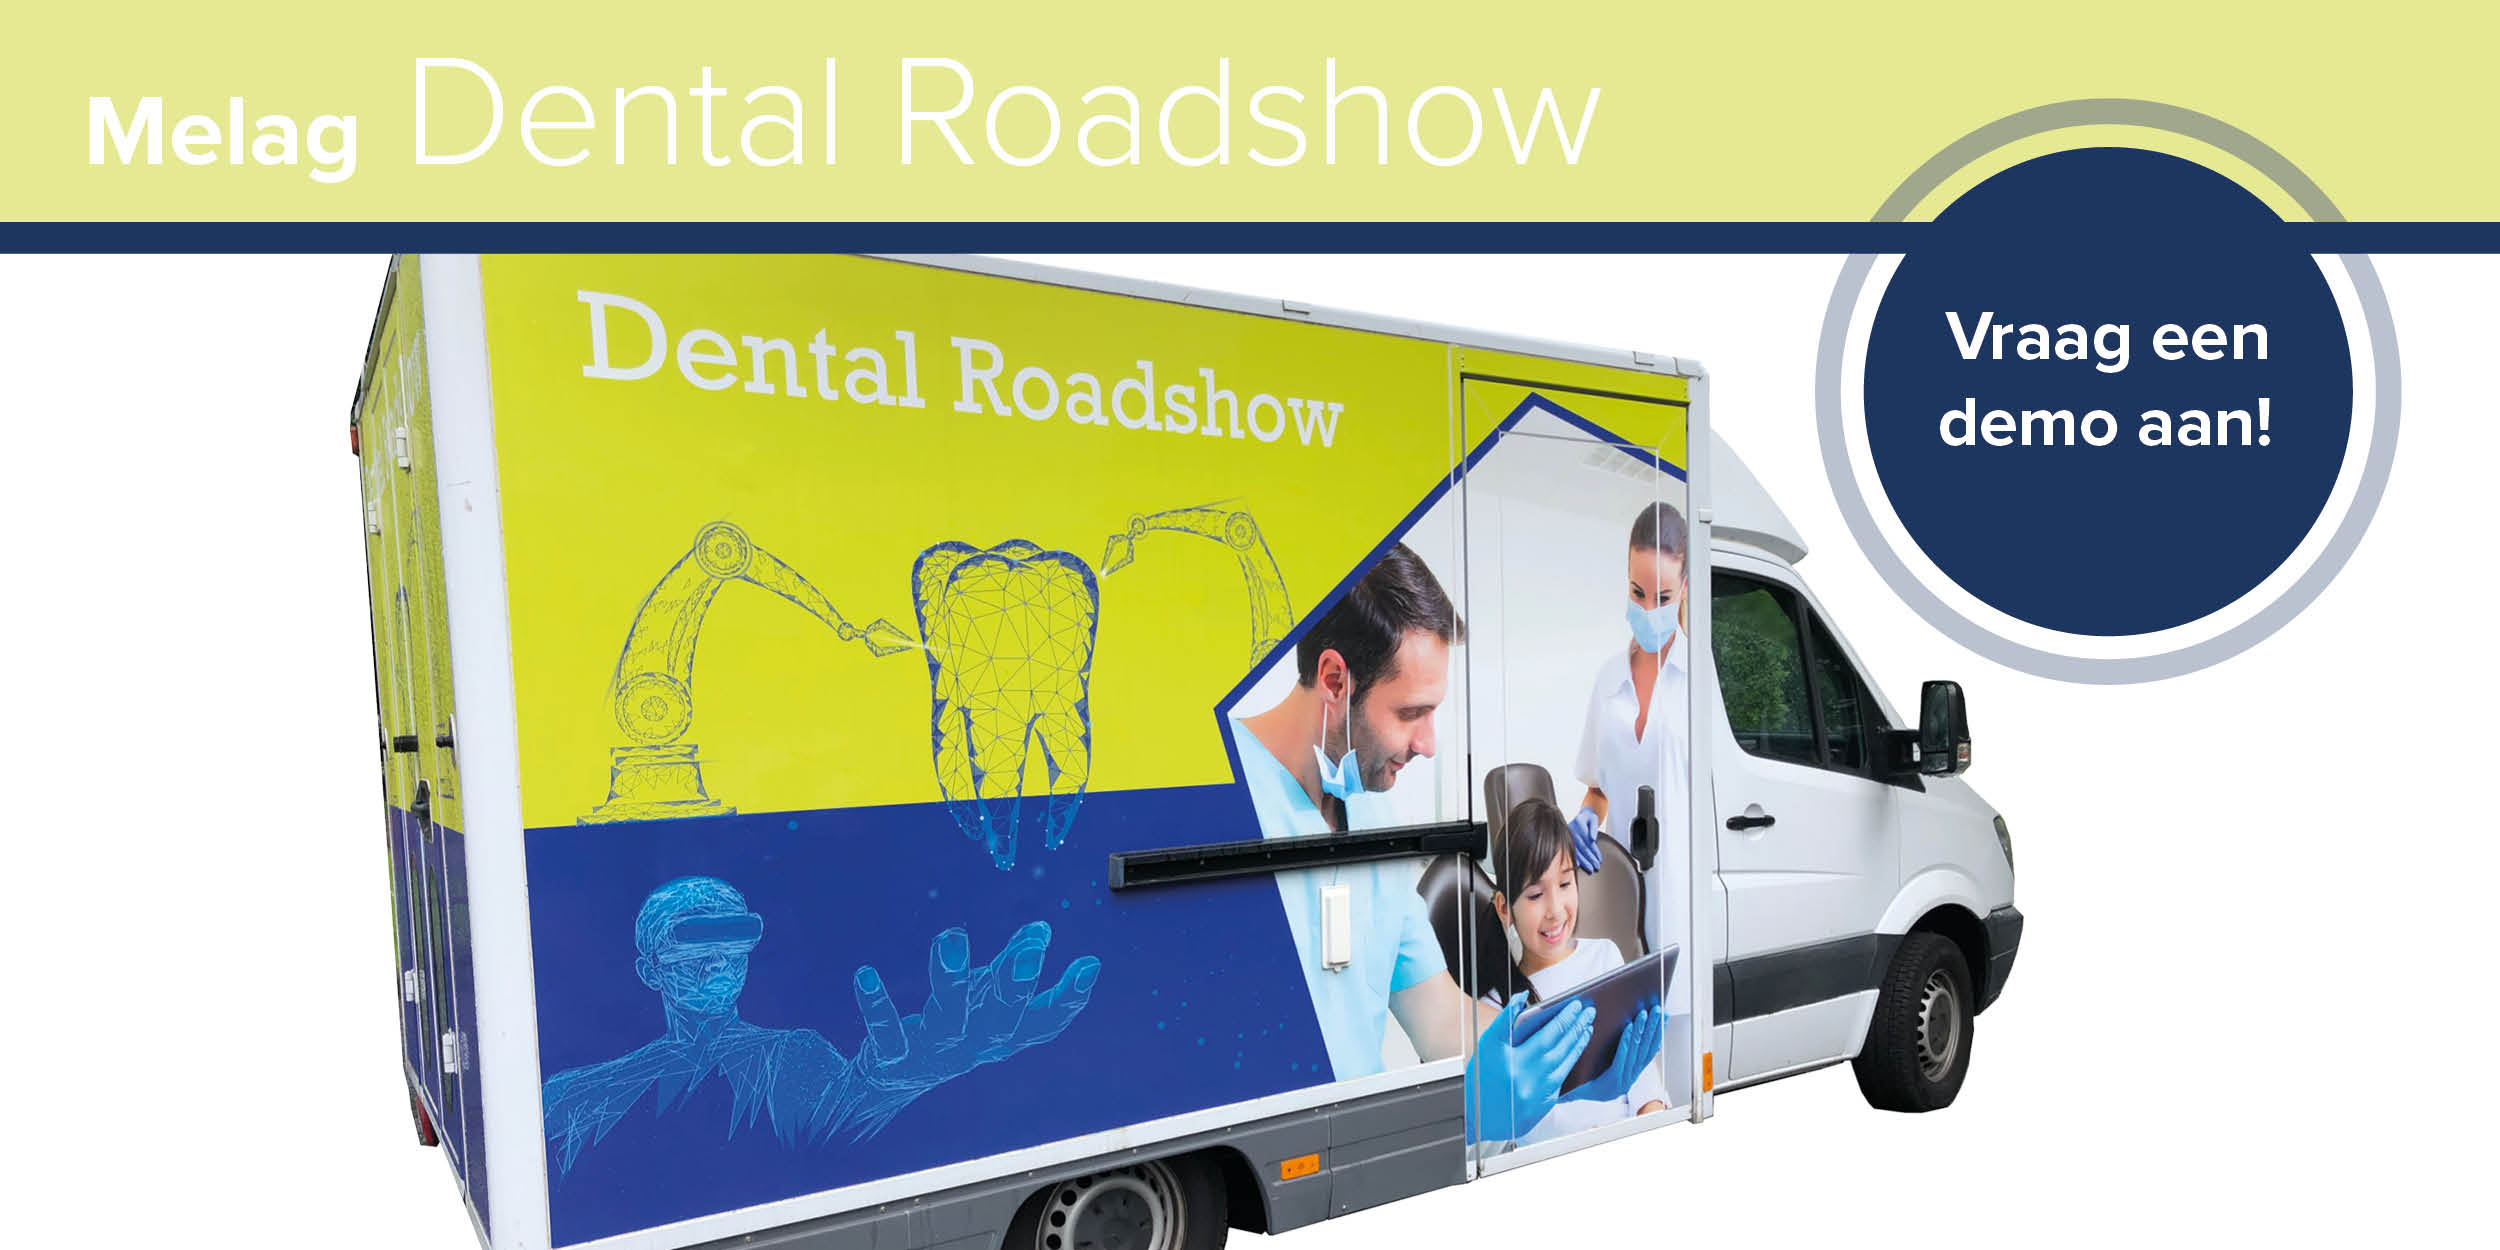 Melag Dental Roadshow